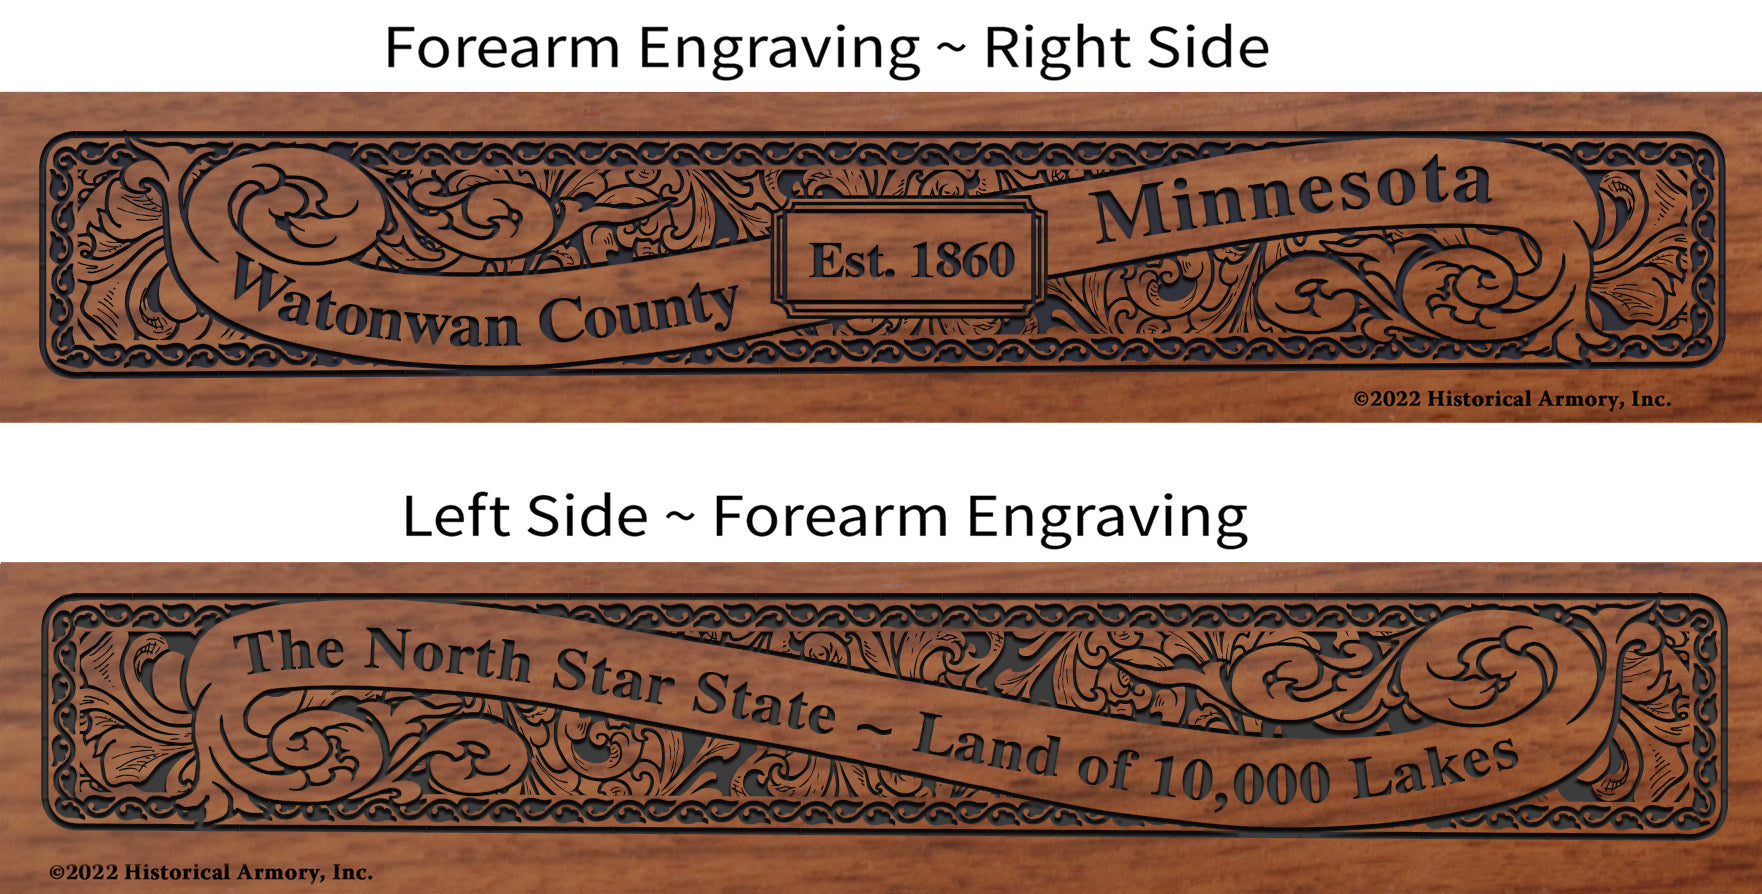 Watonwan County Minnesota Engraved Rifle Forearm